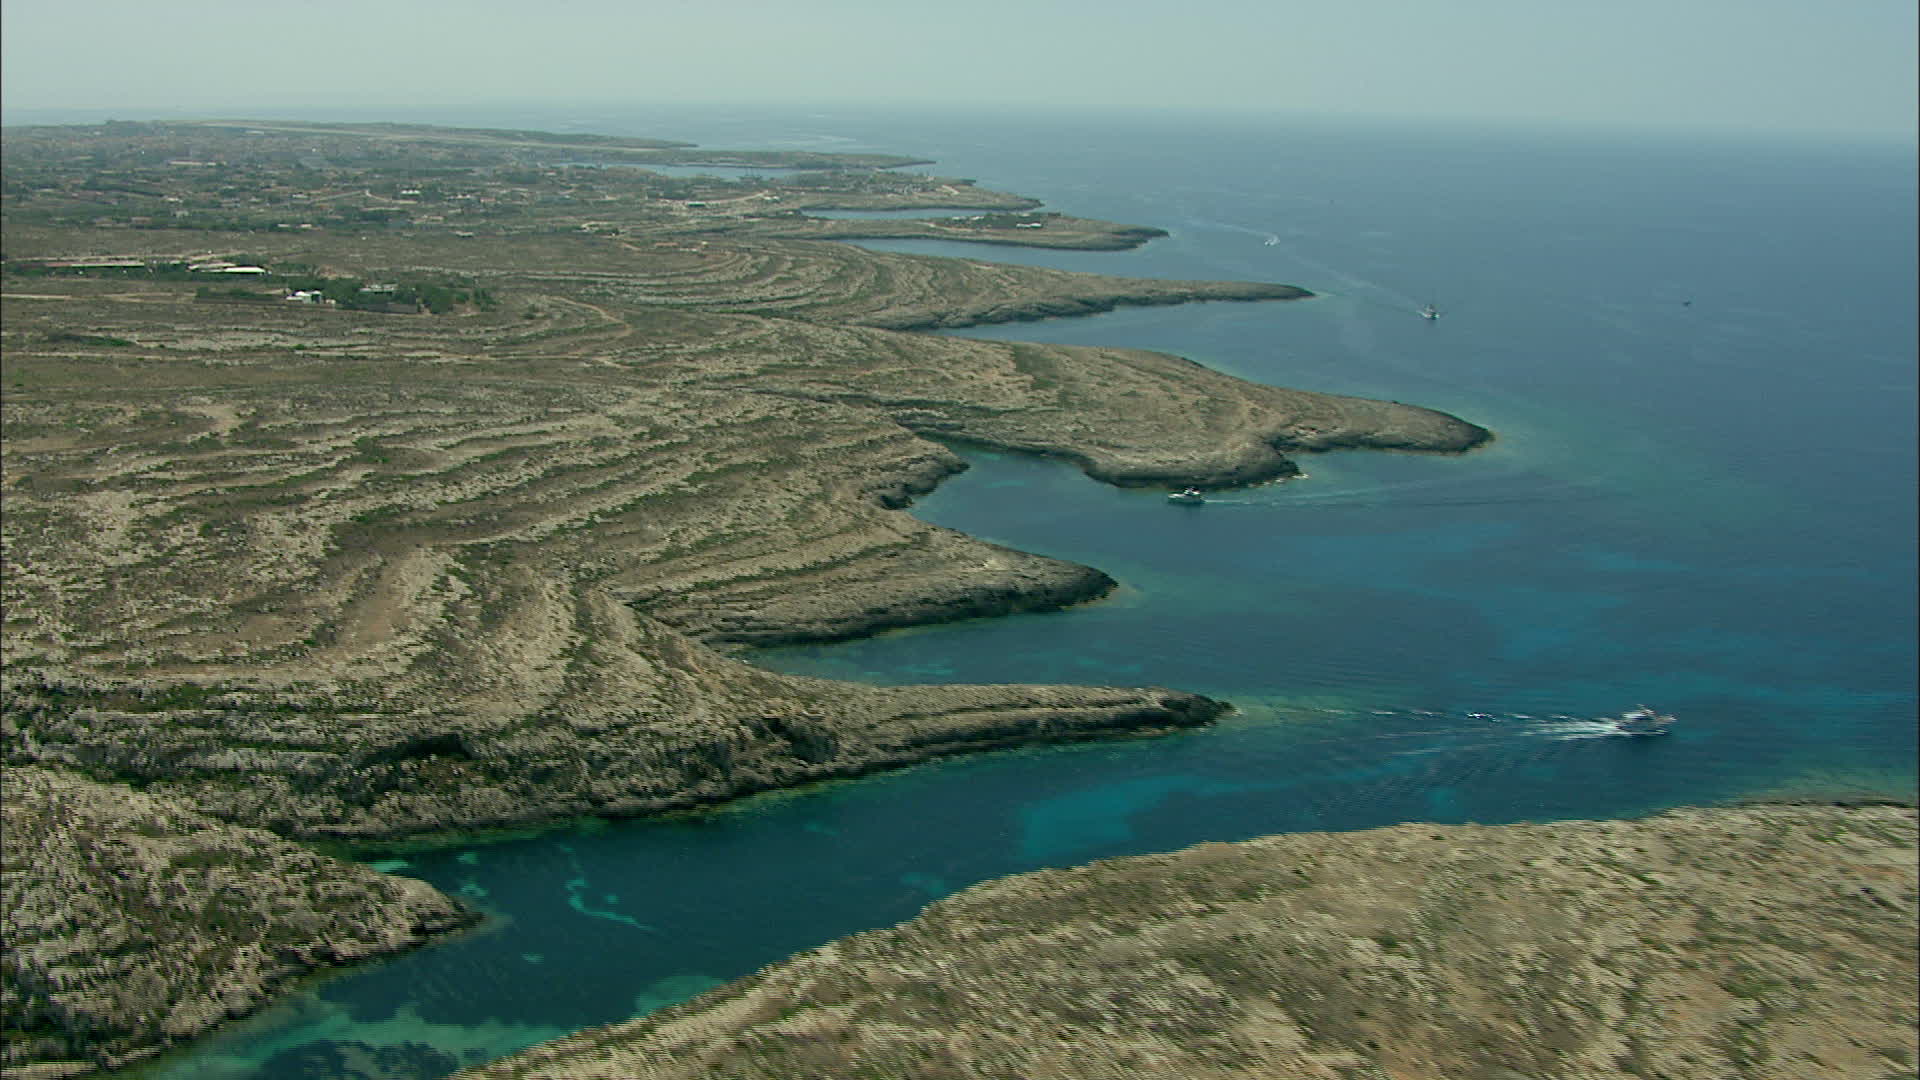 Malta - From the sky